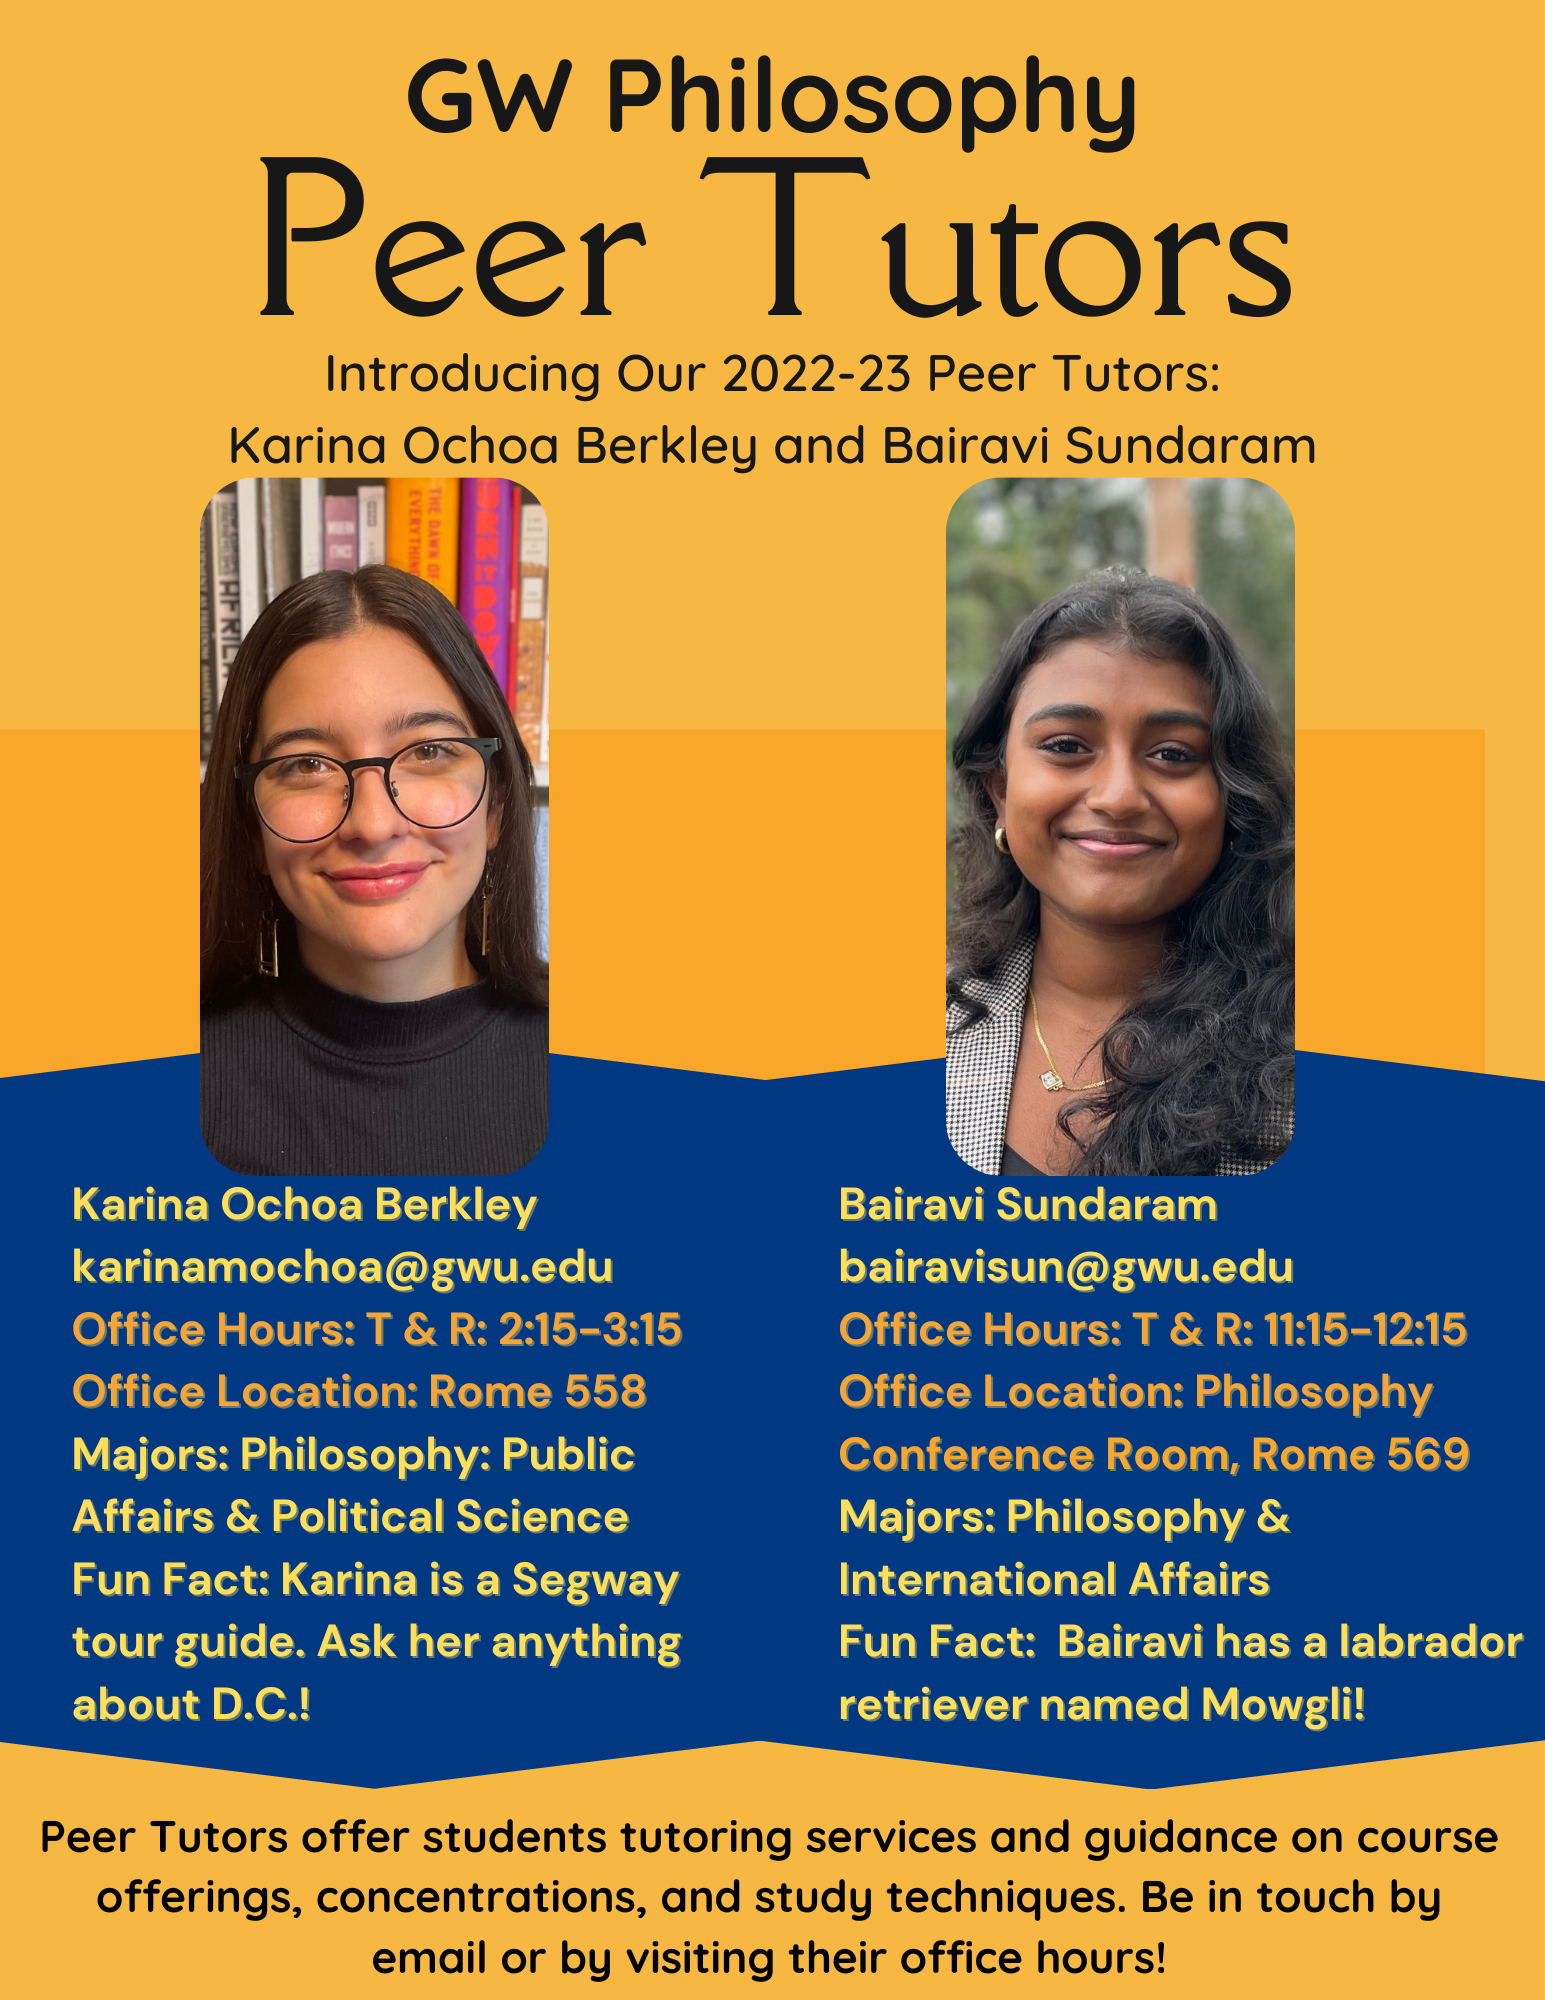 Yellow poster featuring our 2022-2023 Peer Tutors, Karina Ochoa Berkley and Bairavi Sundaram